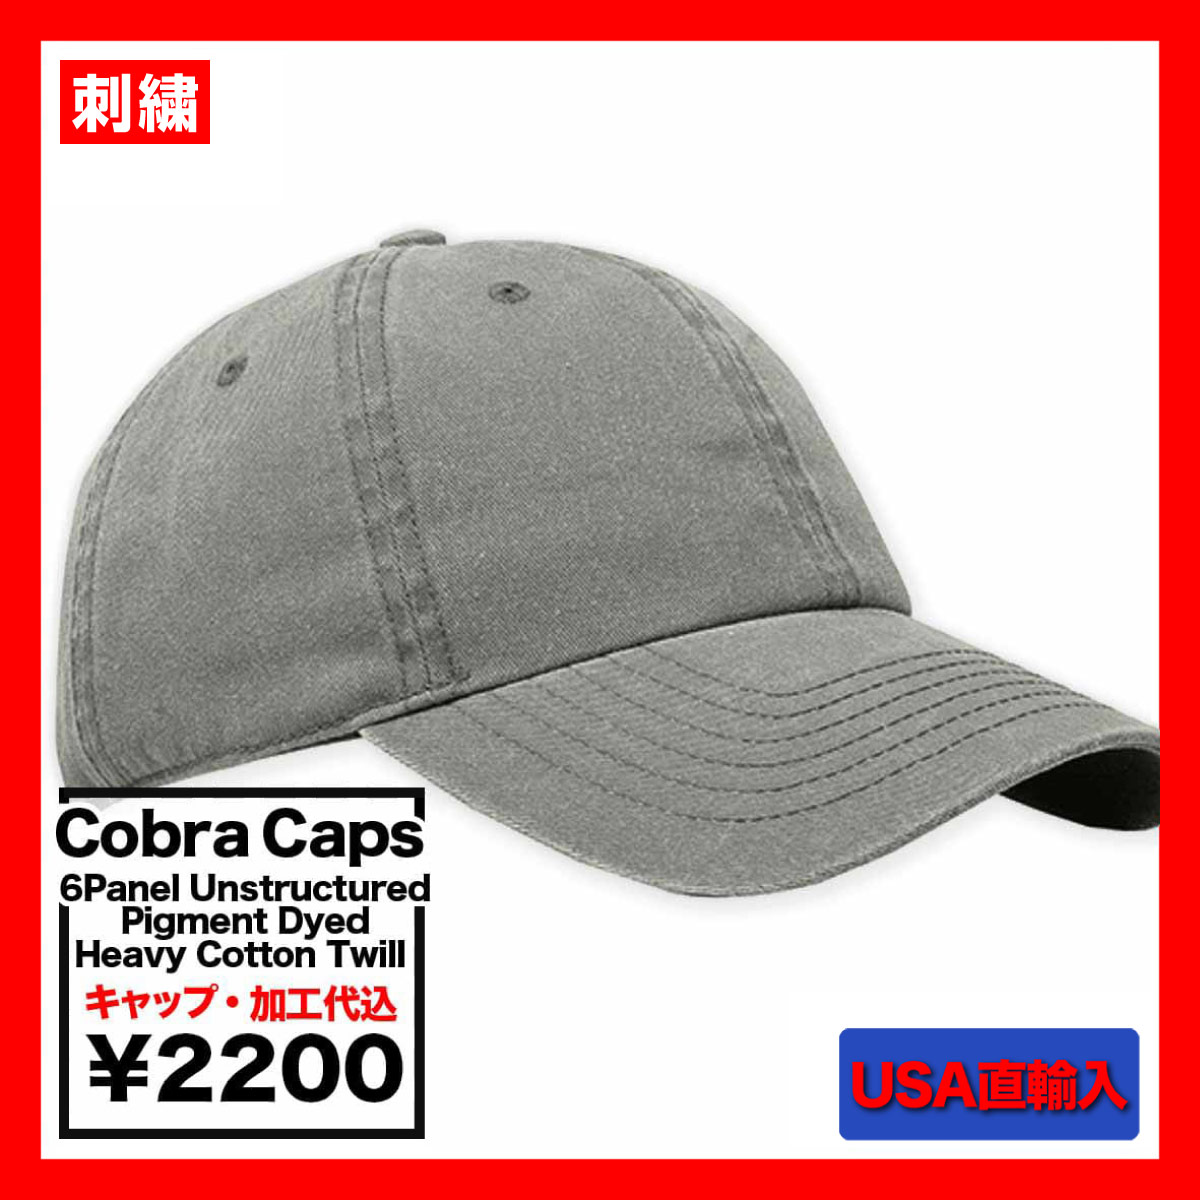 Cobra Caps コブラ キャップス 6 Panel Unstructured Pigment Dyed Heavy Cotton Twill (品番C324US)